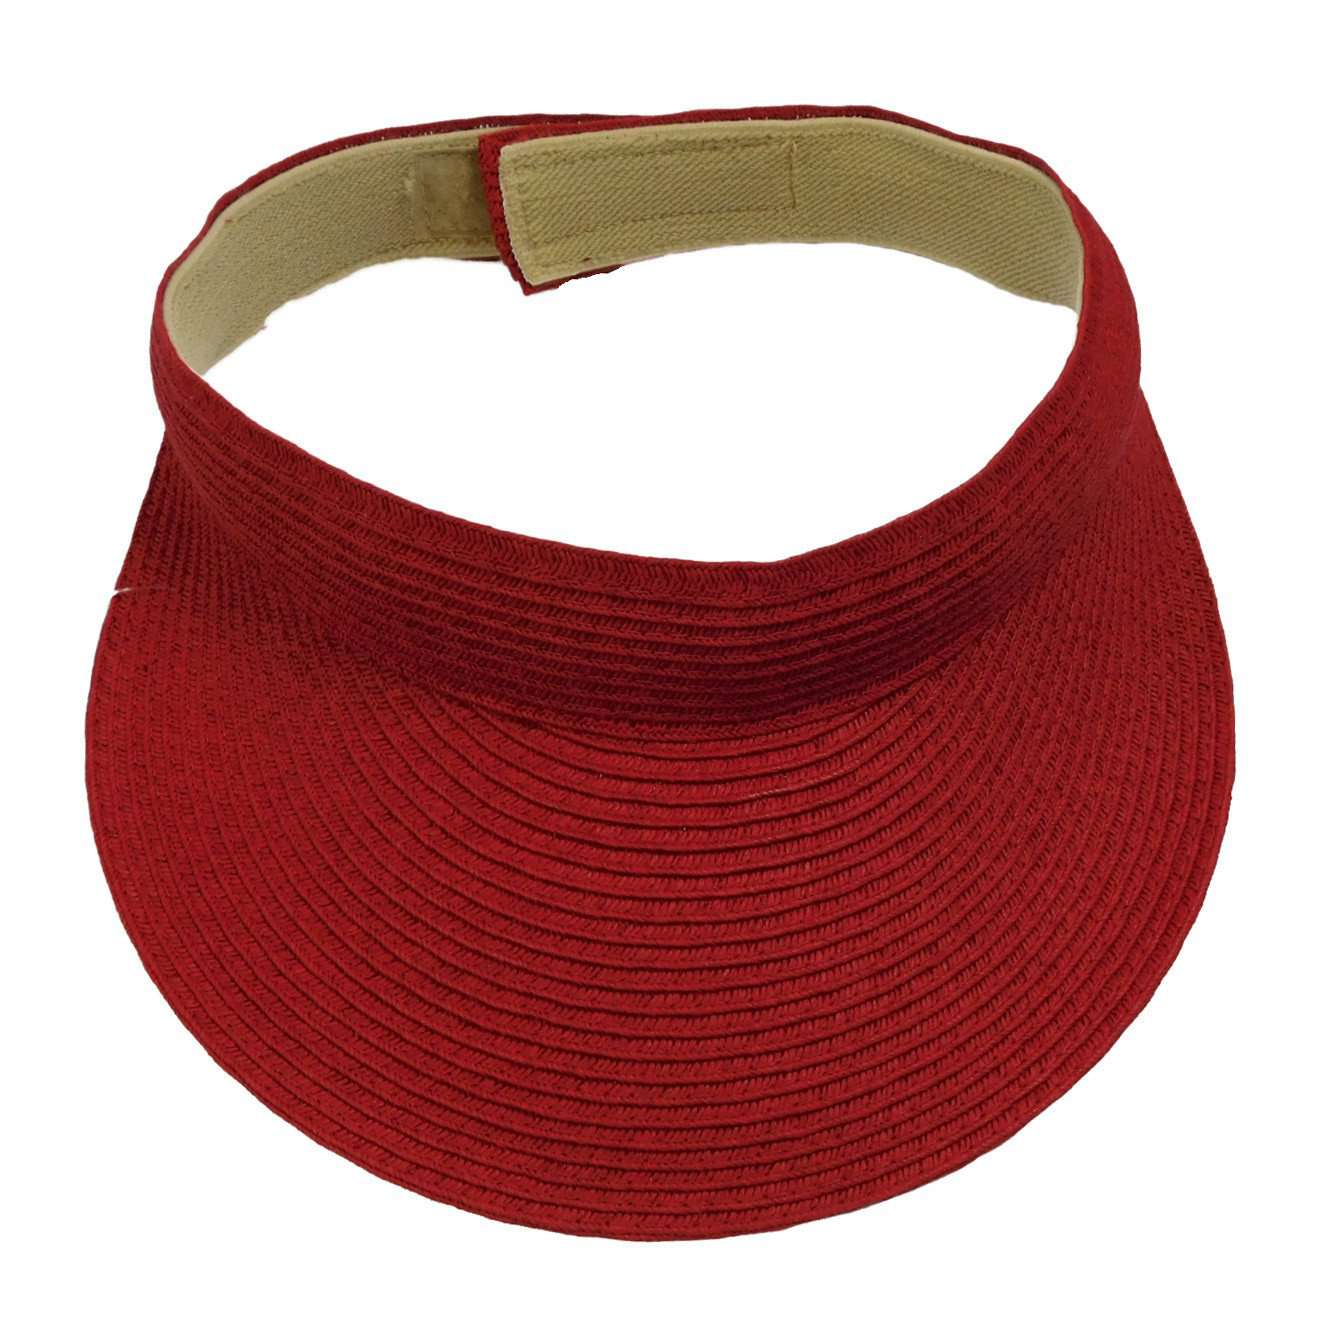 Traditional Solid Color Sun Visor - 8 Beautiful Colors Visor Cap Boardwalk Style Hats da233rd Red  